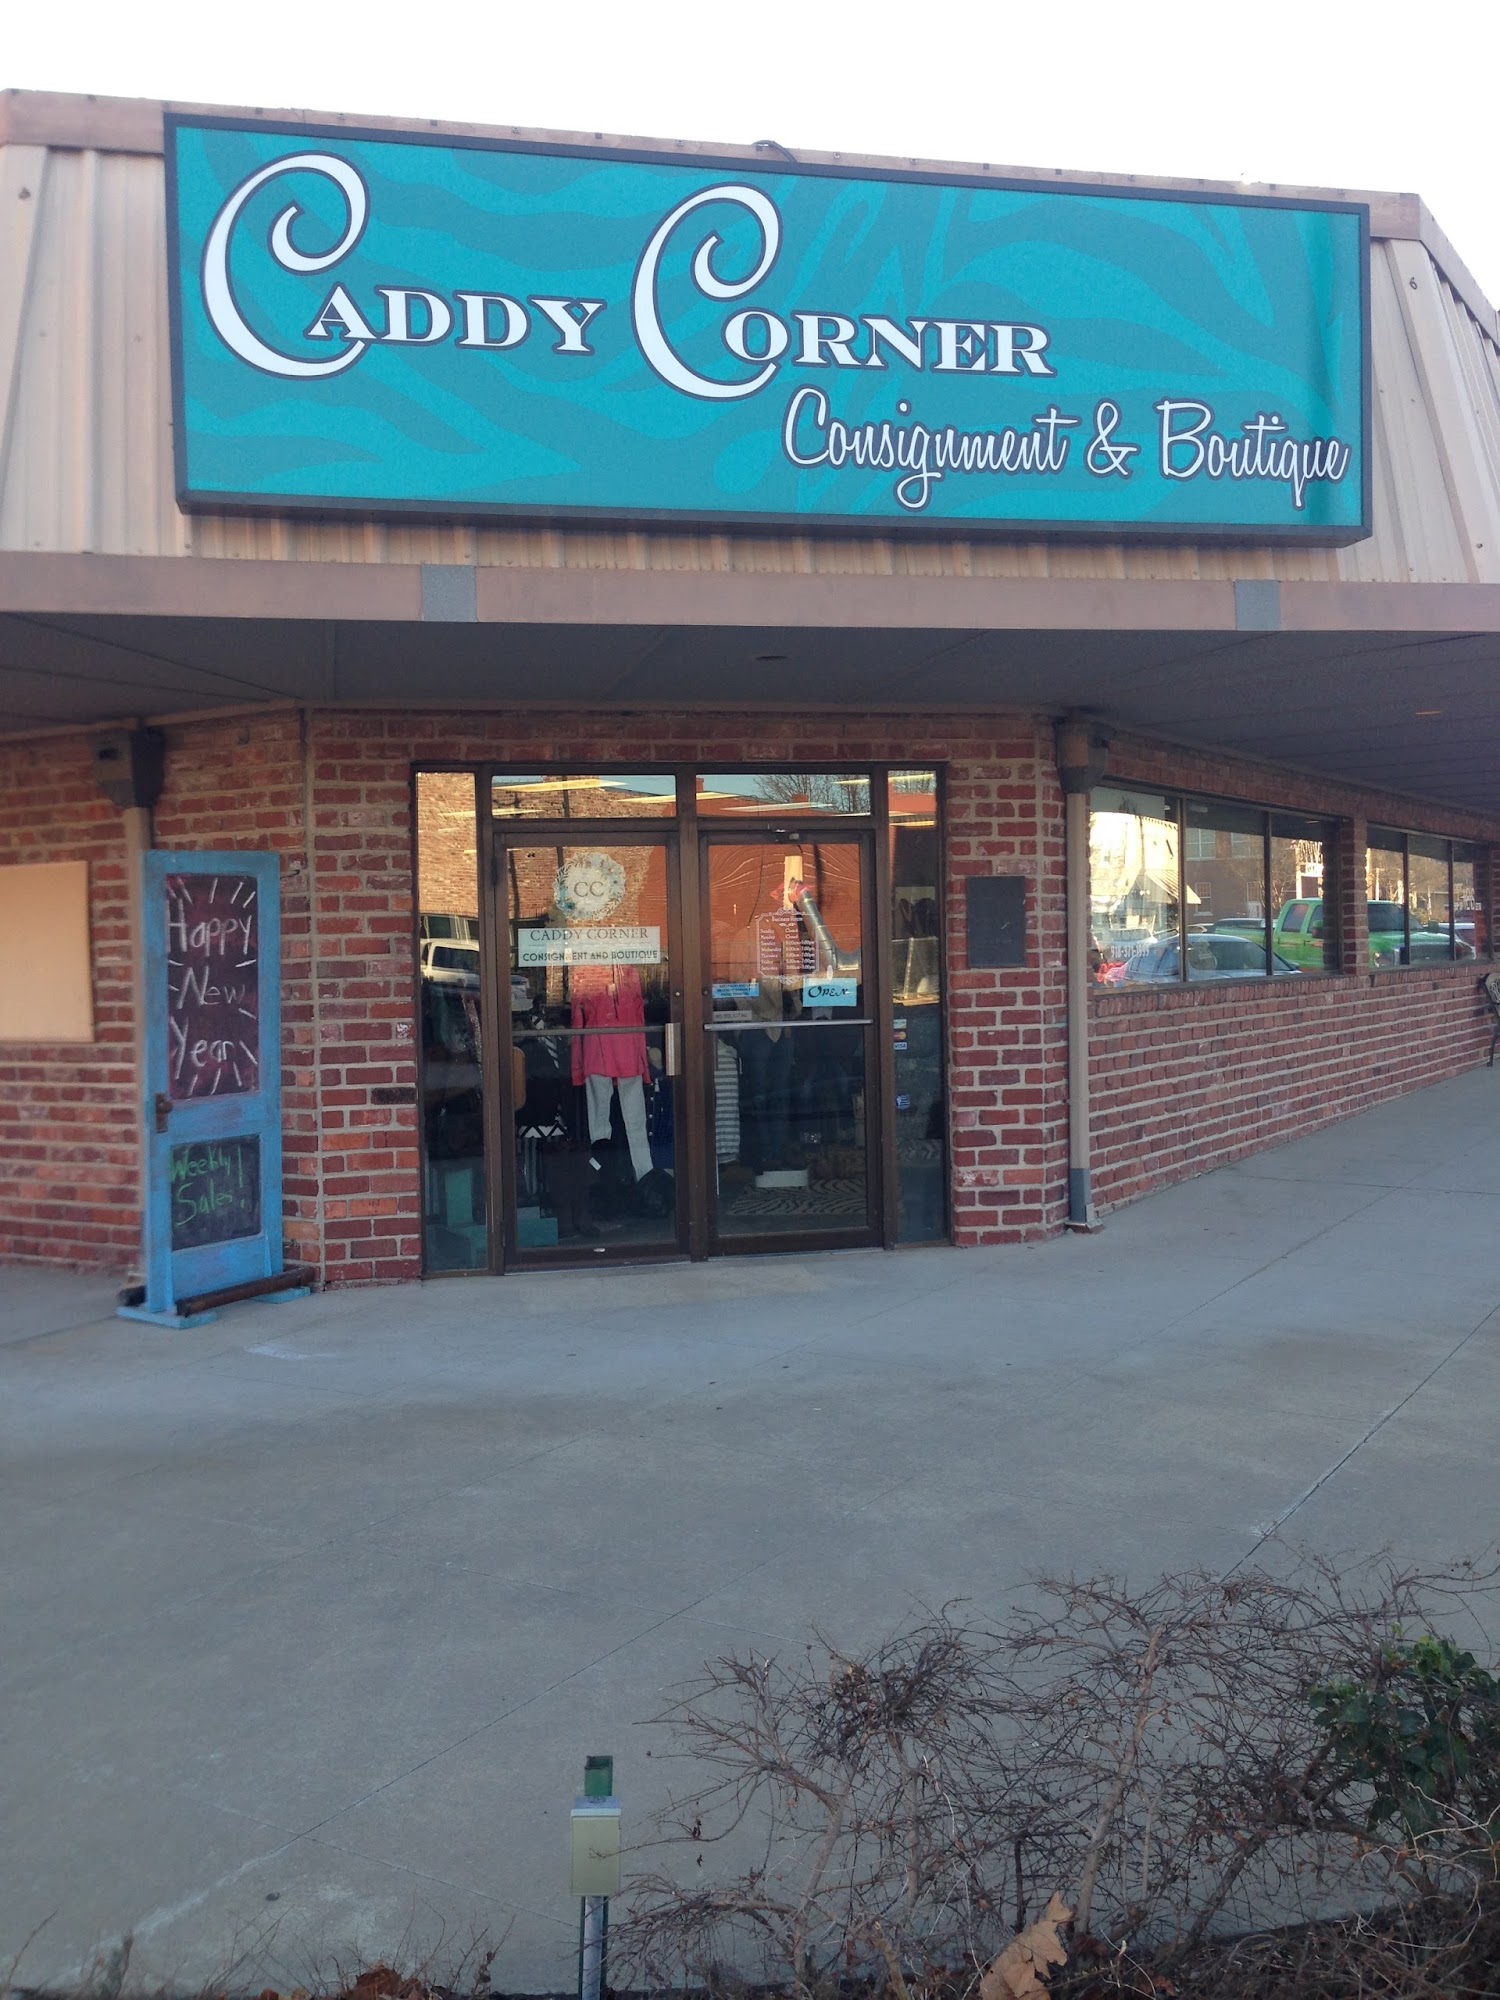 Caddy Corner Consignment & Boutique